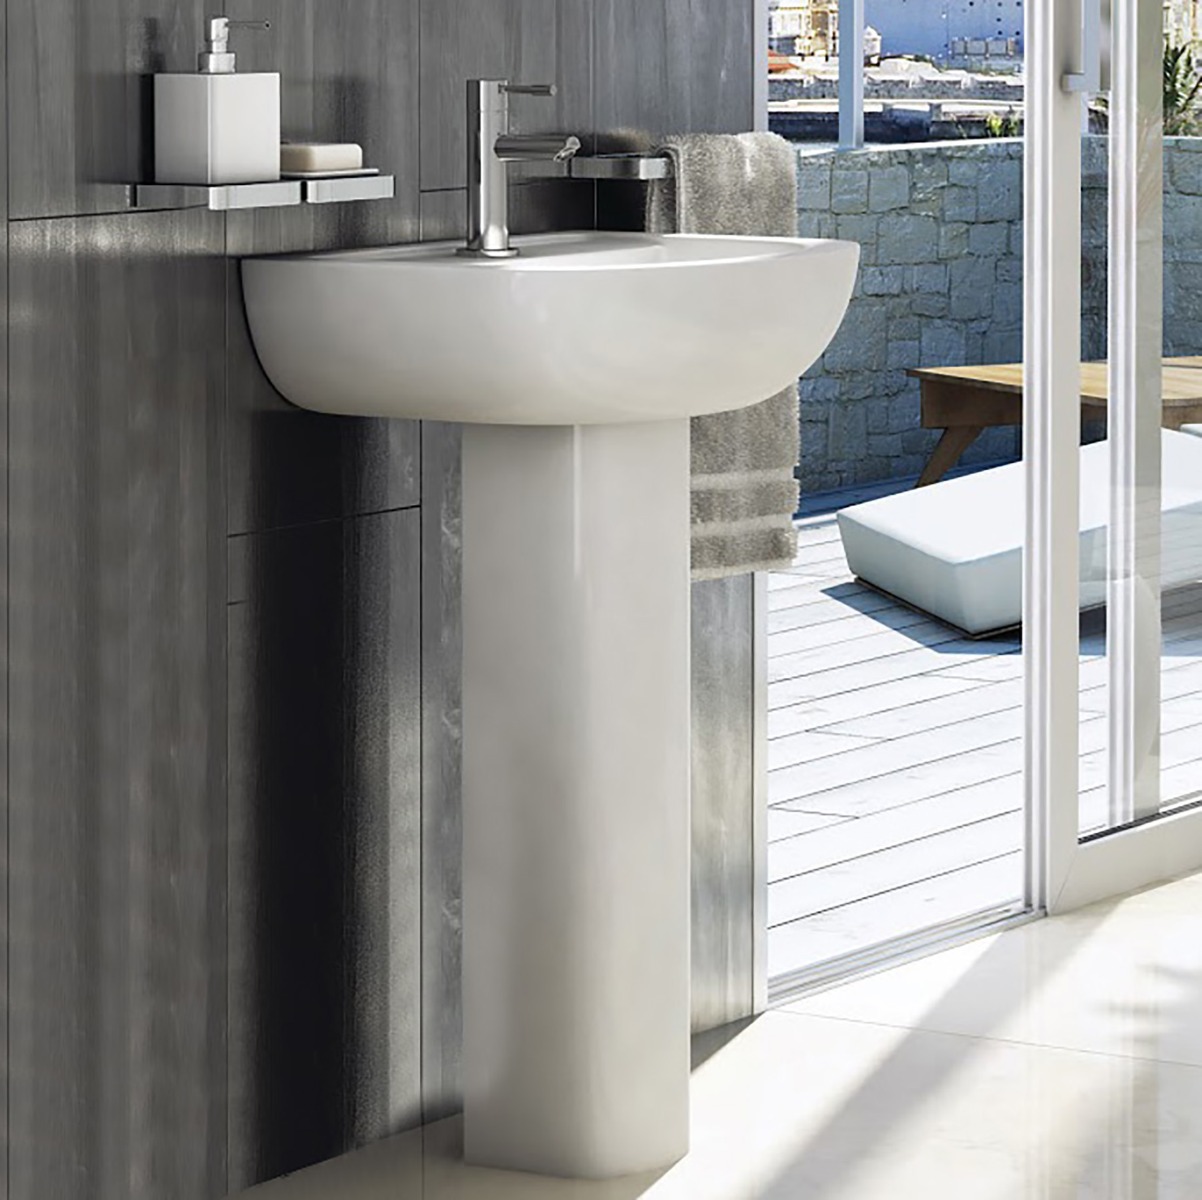 Full Pedestal Basin - Royal Bathrooms